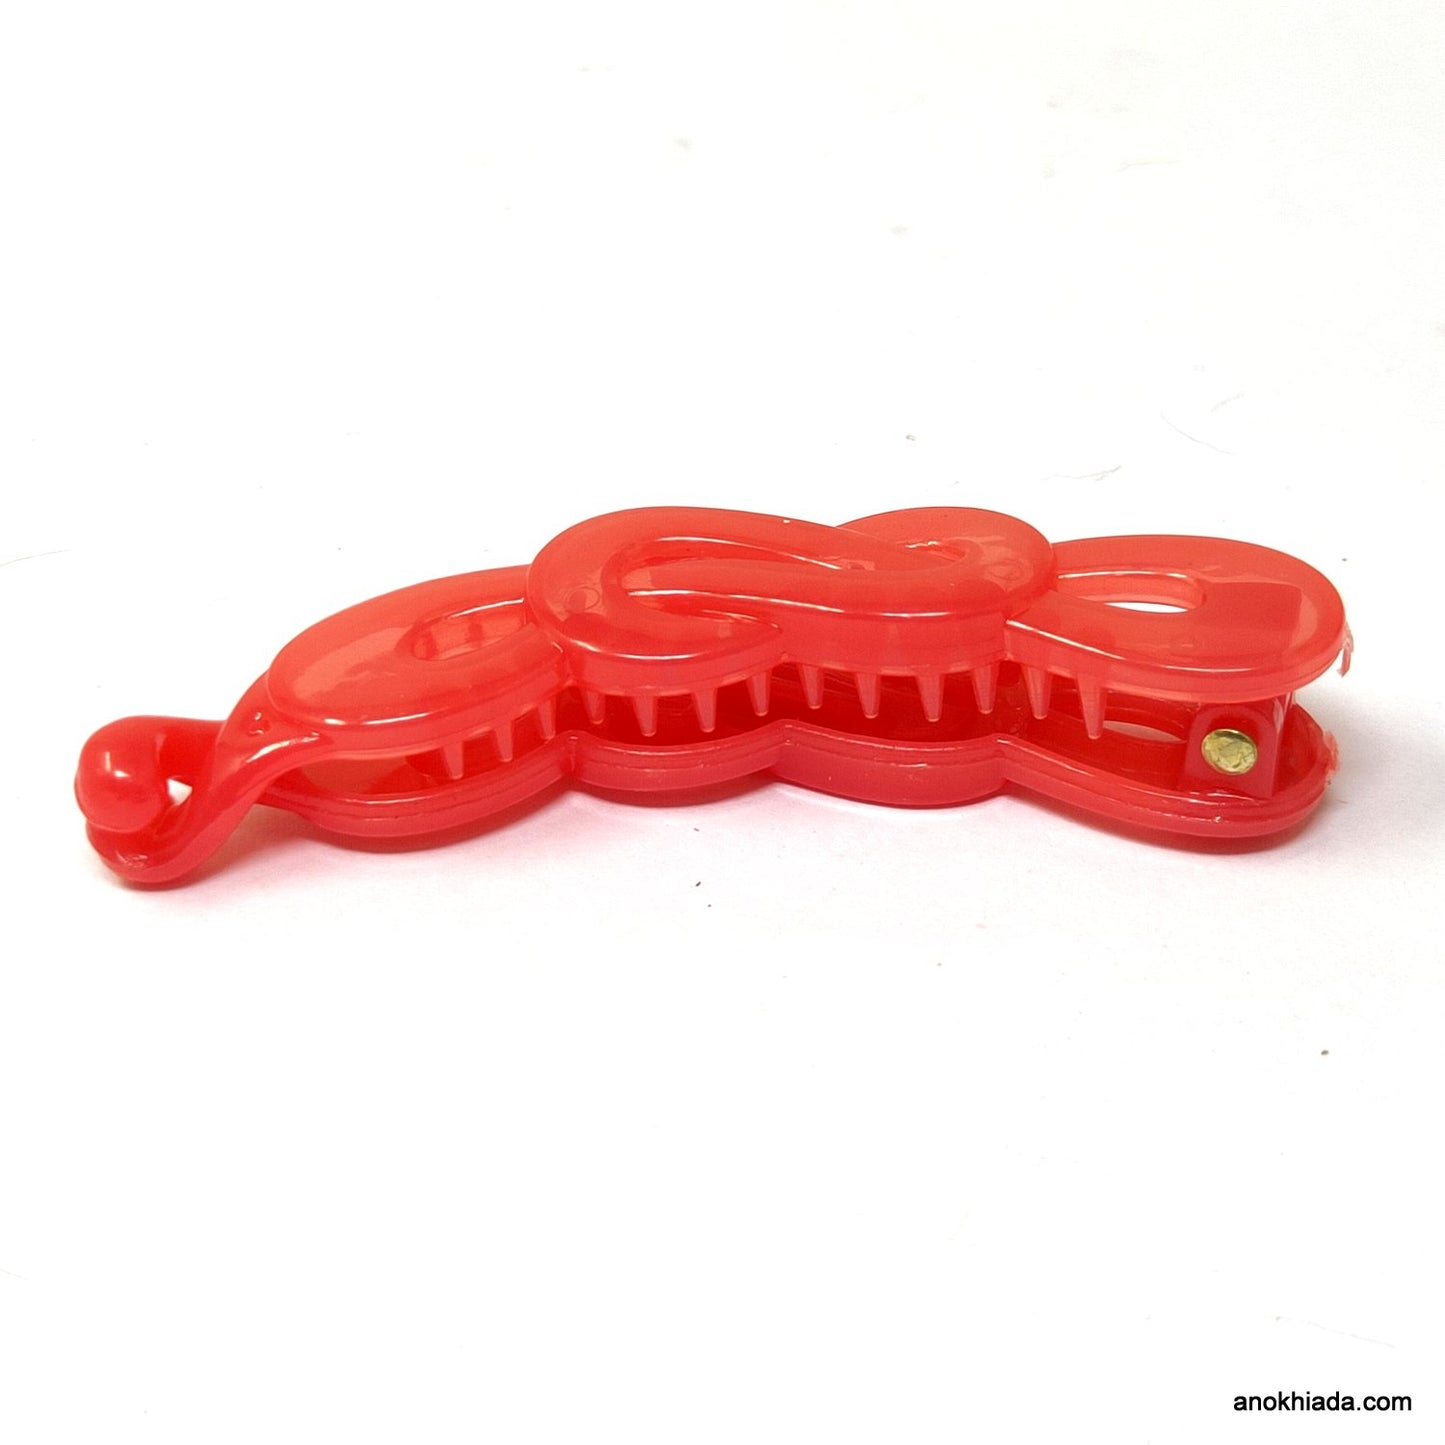 Translucent Infinity Design Small Red Banana Hair Clip for Girls & Woman (98-14E Banana Hair Clips)